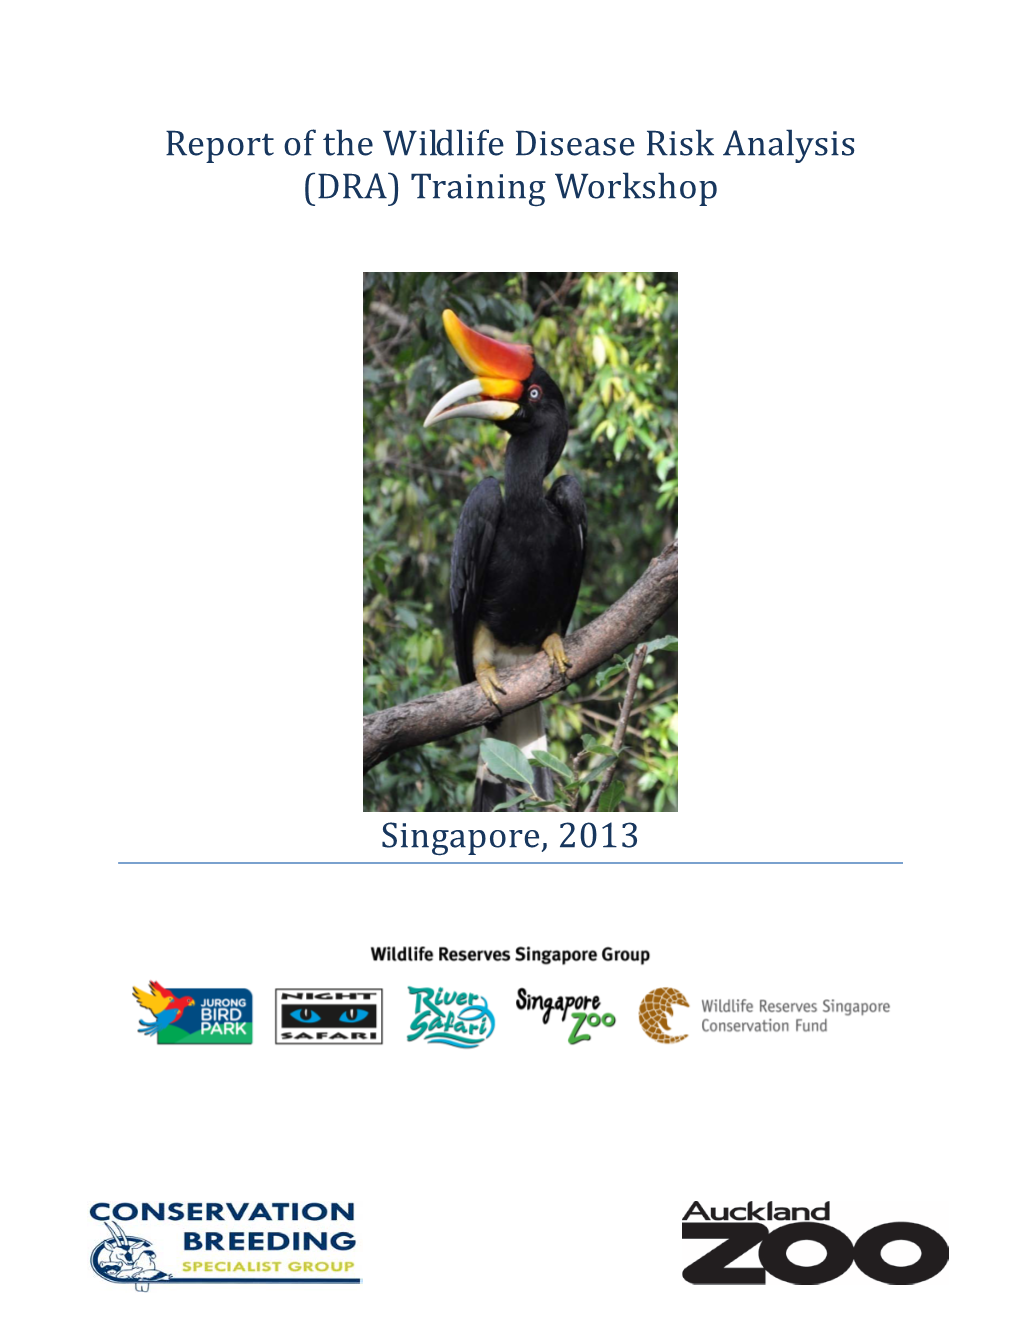 Report of Singapore Wildlife DRA Training Workshop 2013.Pdf